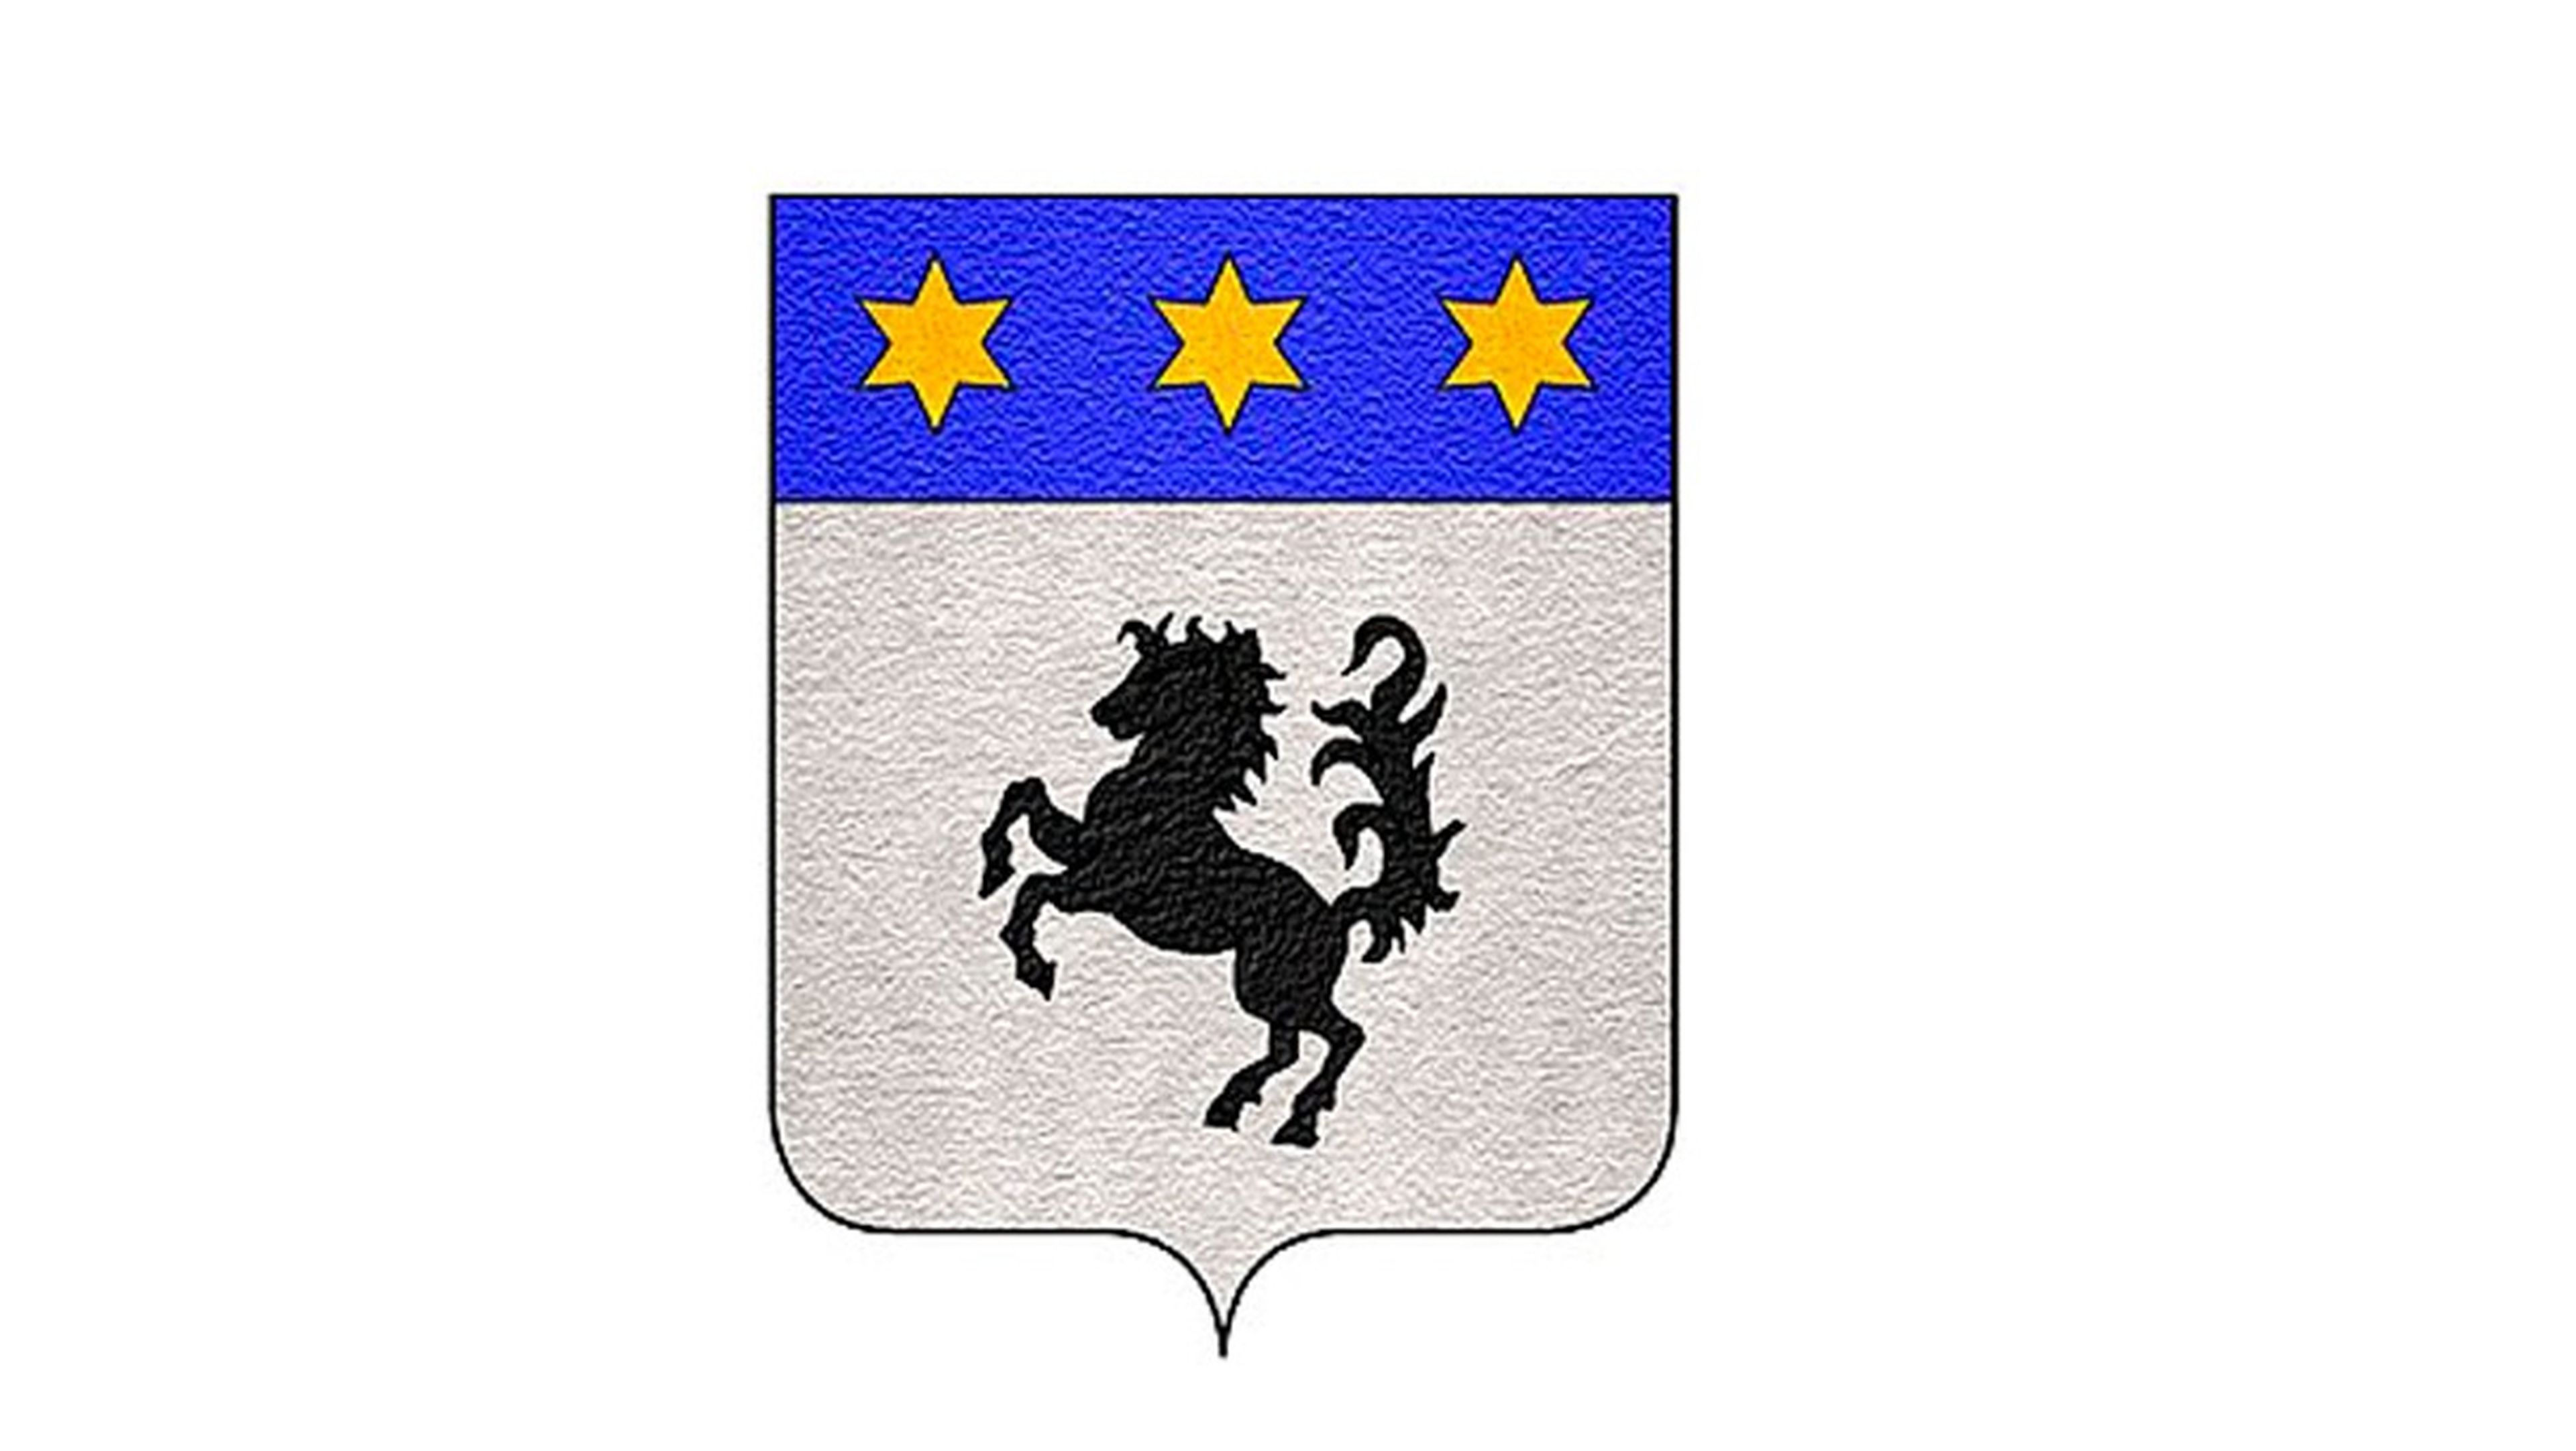 ESCUDO-DE-LA-FAMILIA-BARACCA, origen del logo de Ferrari